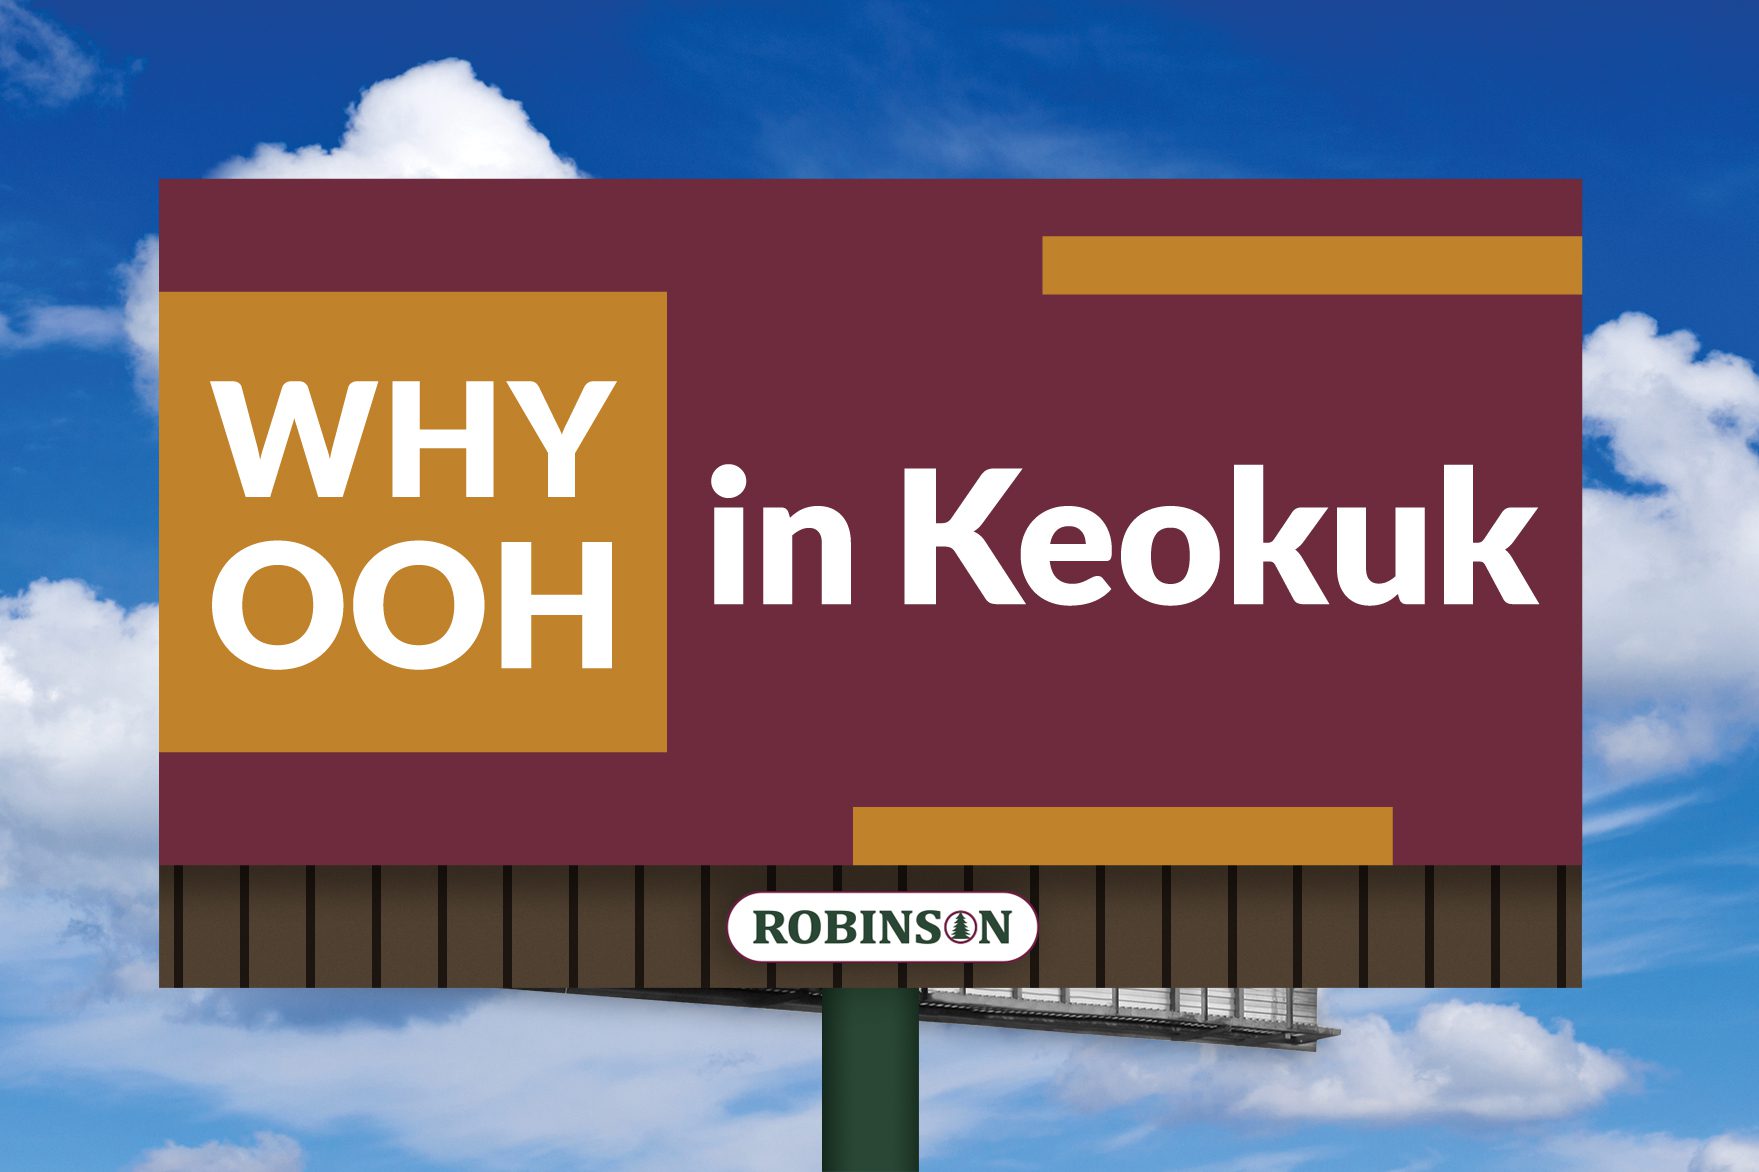 Keokuk, Iowa digital billboard advertising